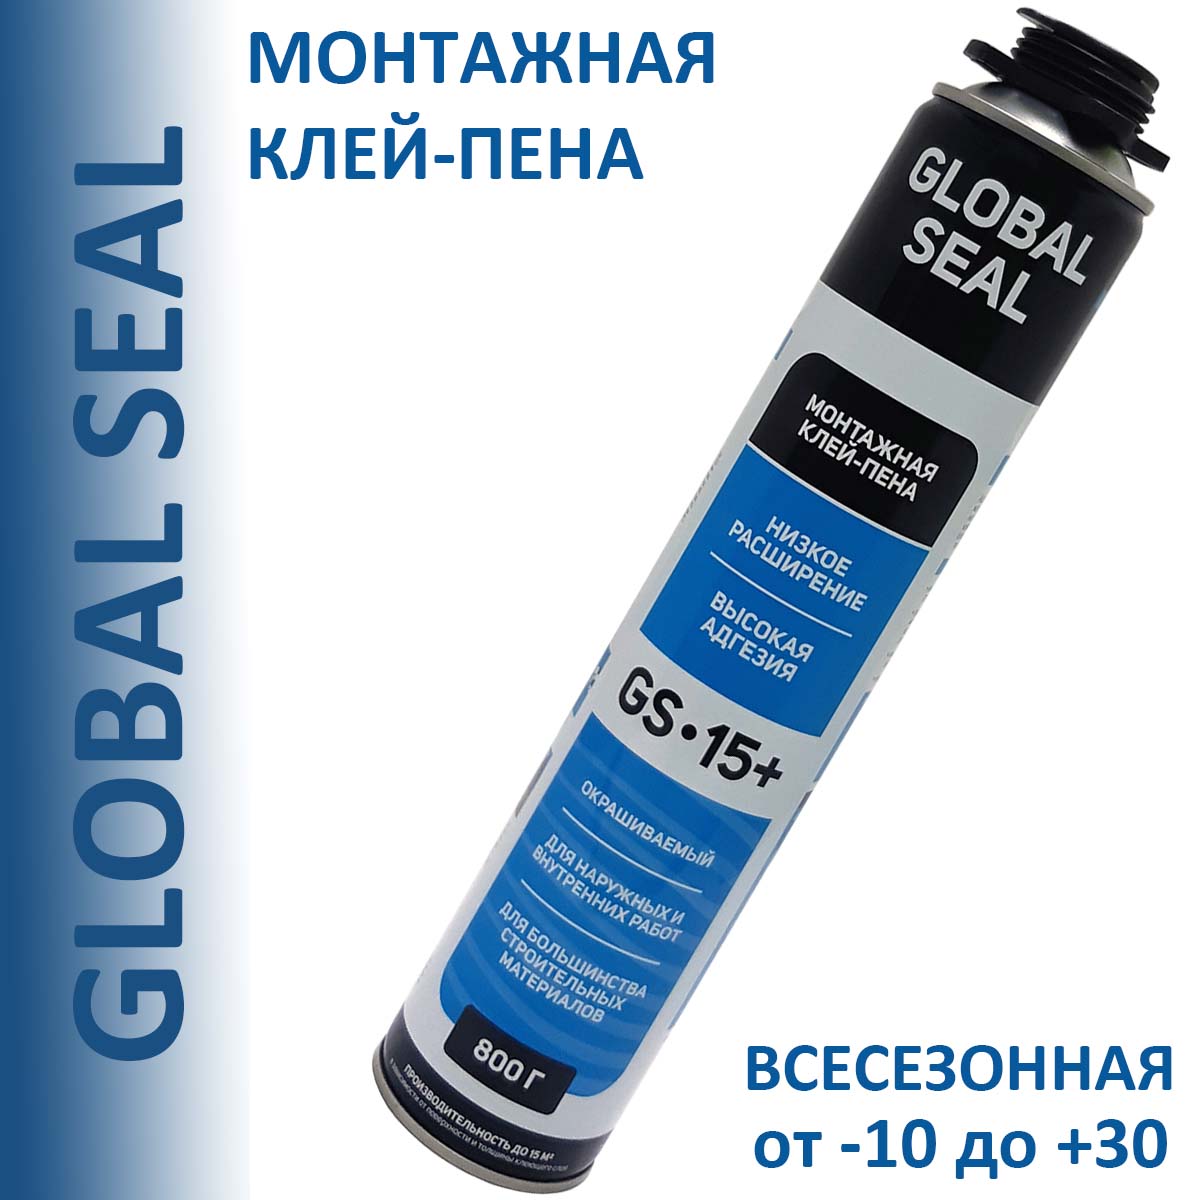 Клей-пена Монтажная Global Seal GS-15, всесезонная, 800 гр. всесезонная клей пена profpur